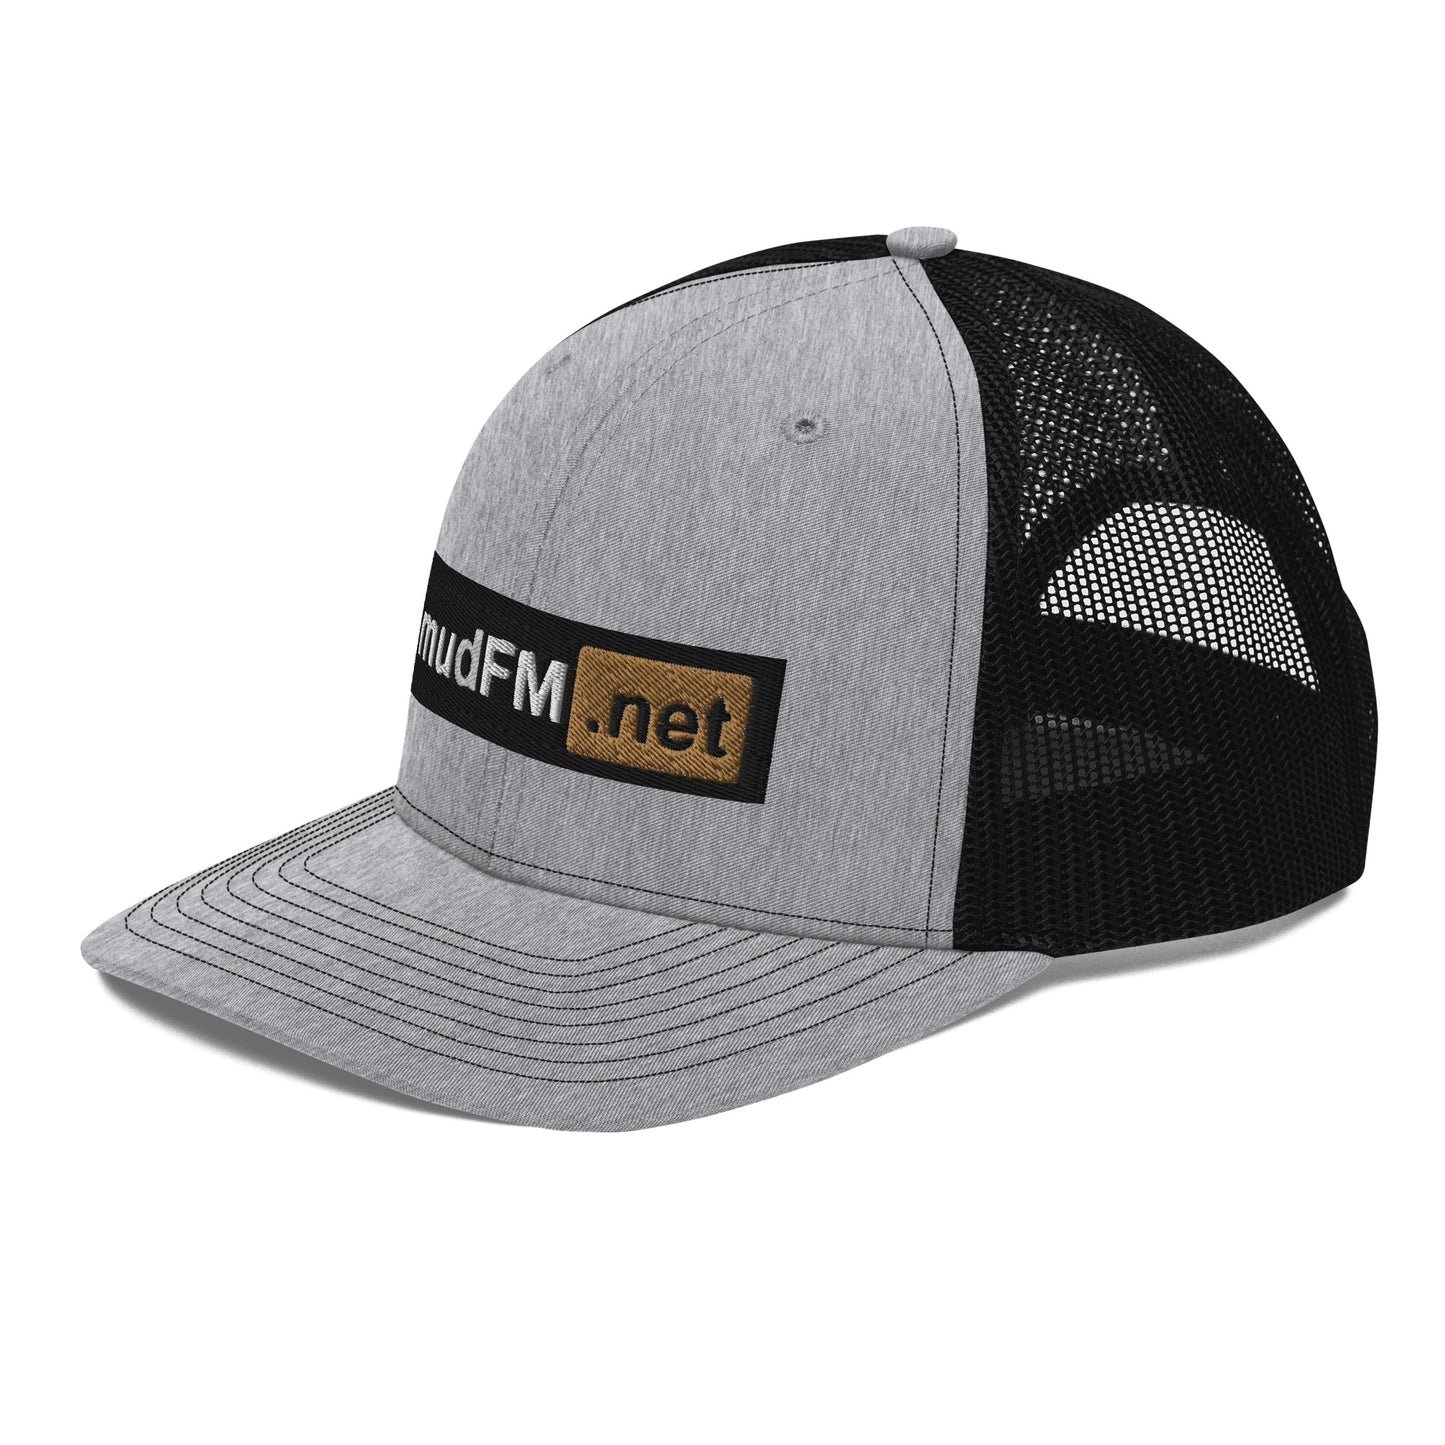 mudfm.net/logo - Trucker Cap - mudfm